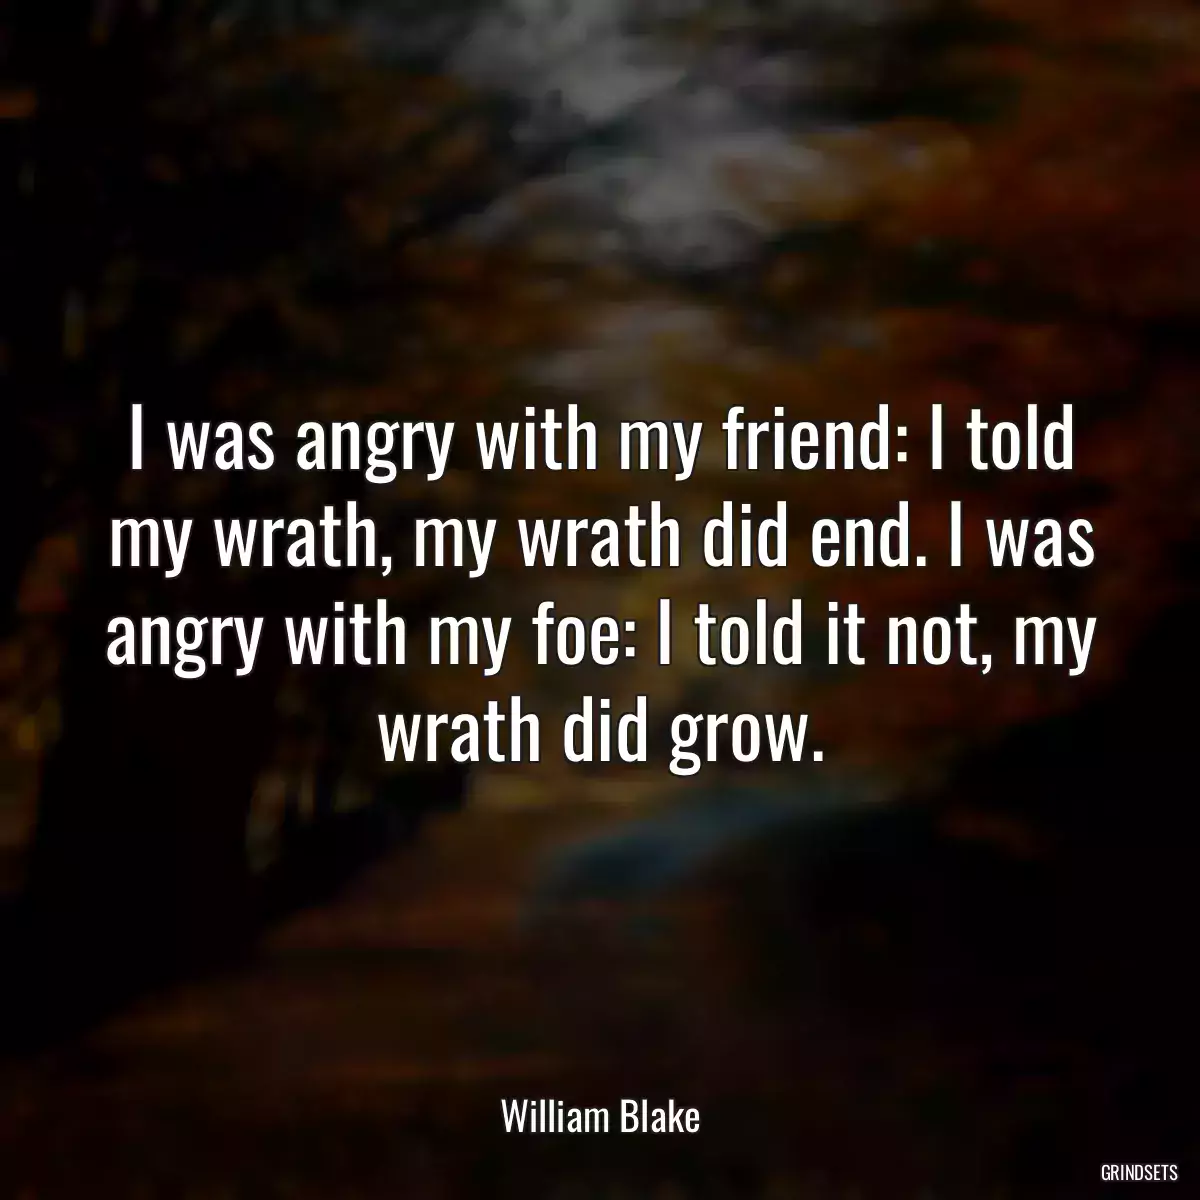 I was angry with my friend: I told my wrath, my wrath did end. I was angry with my foe: I told it not, my wrath did grow.